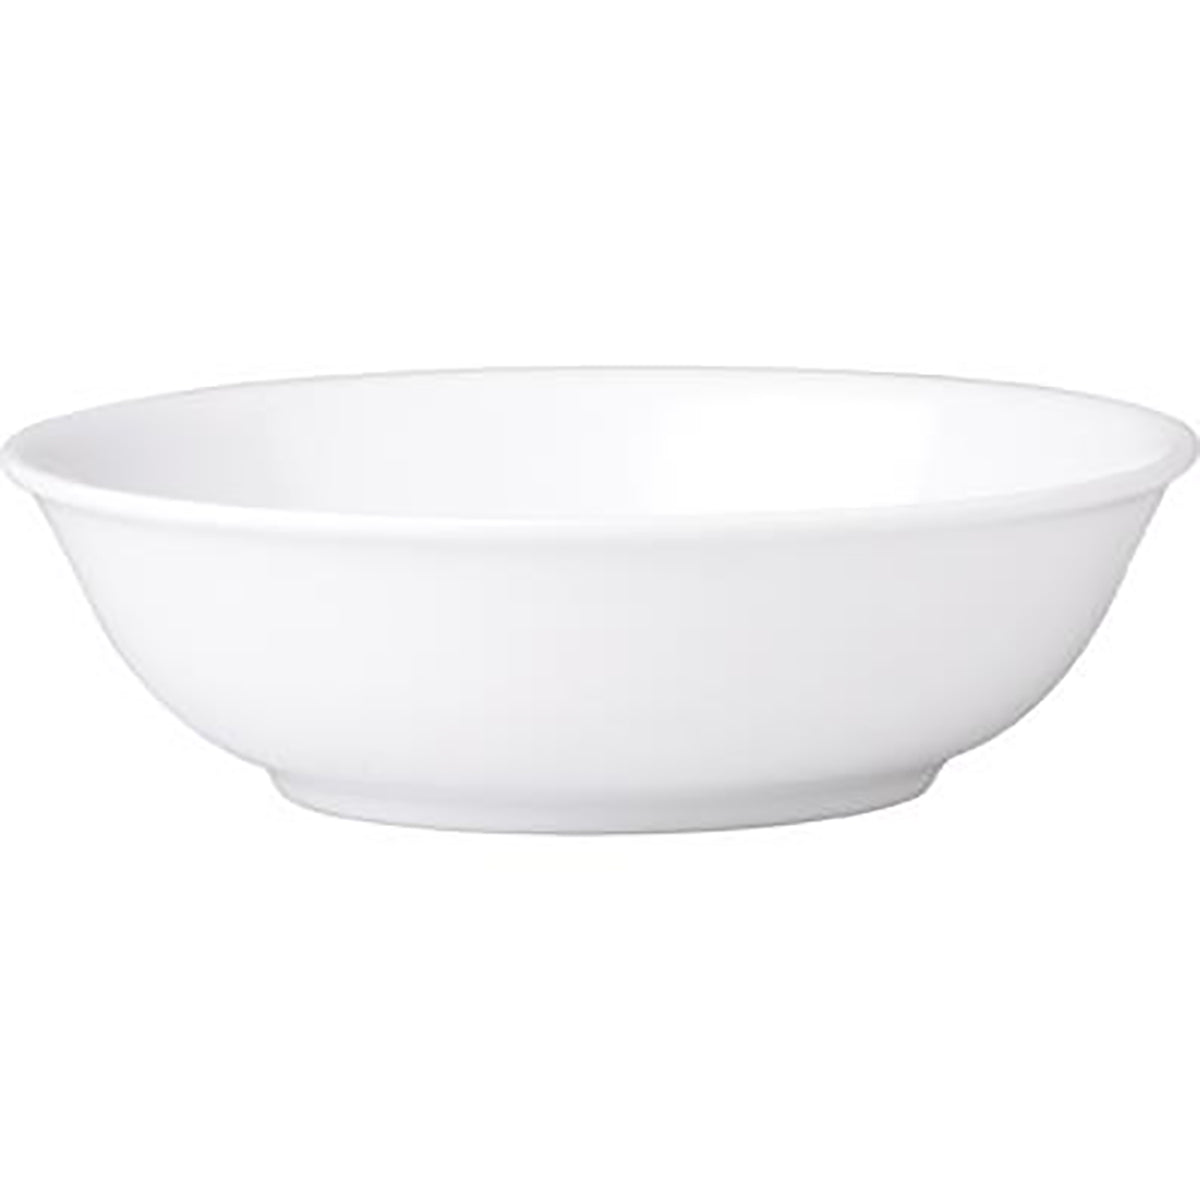 94027 Royal Porcelain Chelsea Pasta/Soup Bowl Coupe 185mm (0308) Tomkin Australia Hospitality Supplies